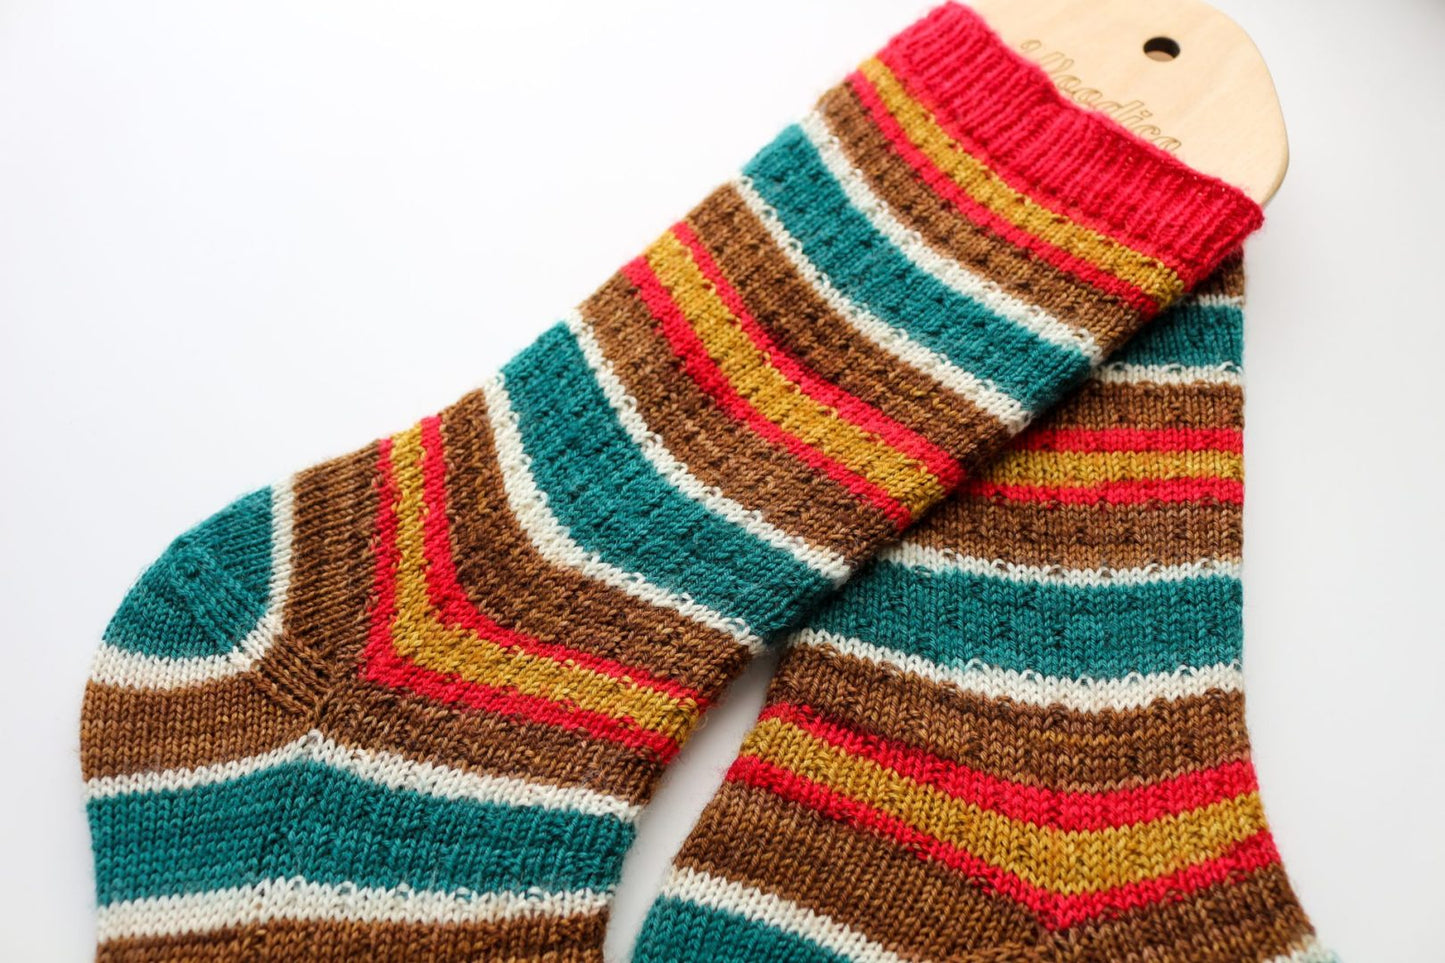 Self-striping sock yarn knitting project